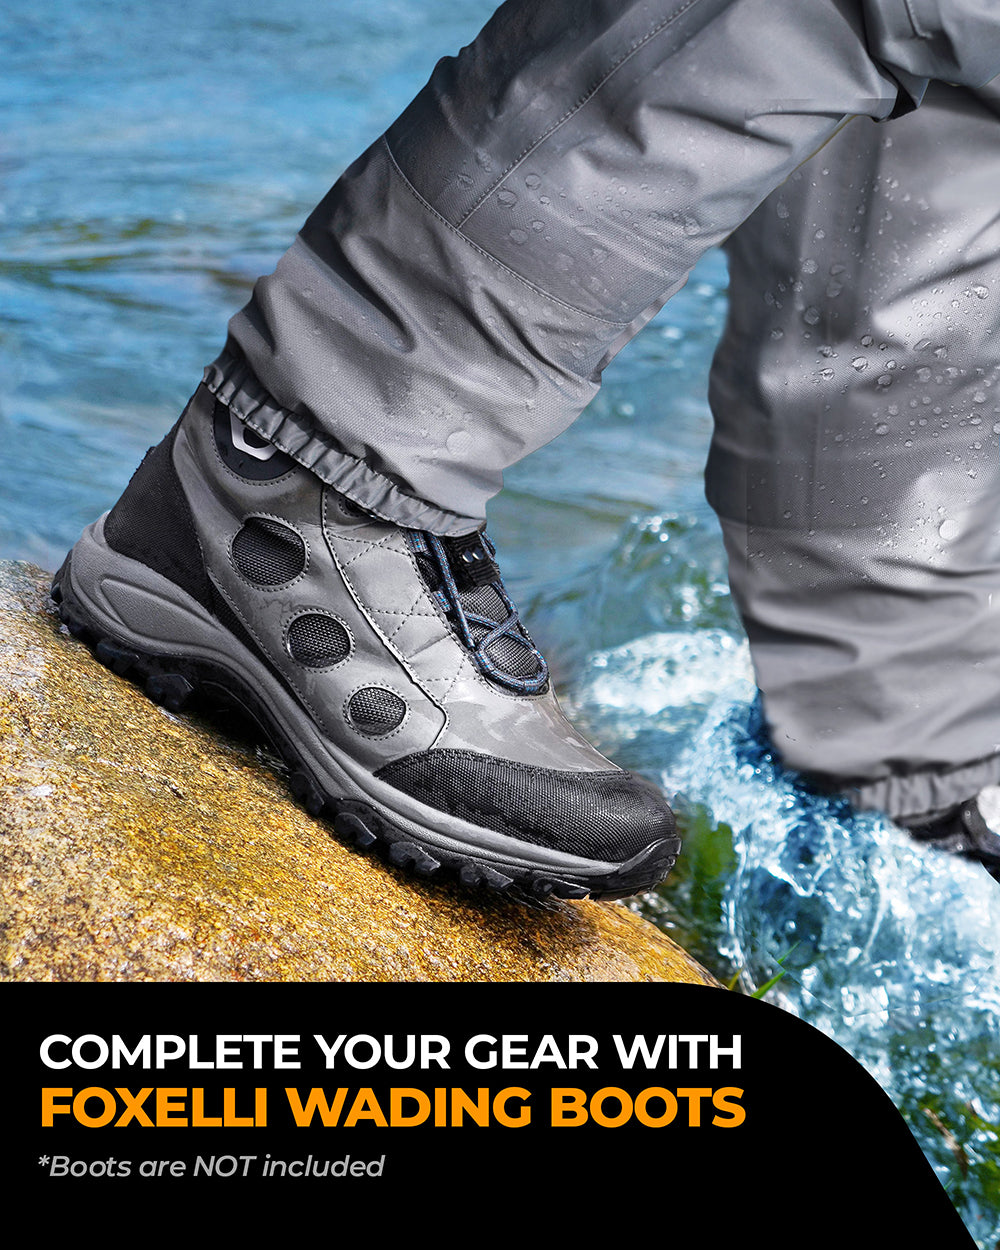 DEILAI Hip Waders, Lightweight Waterproof Hip Boots for Men and